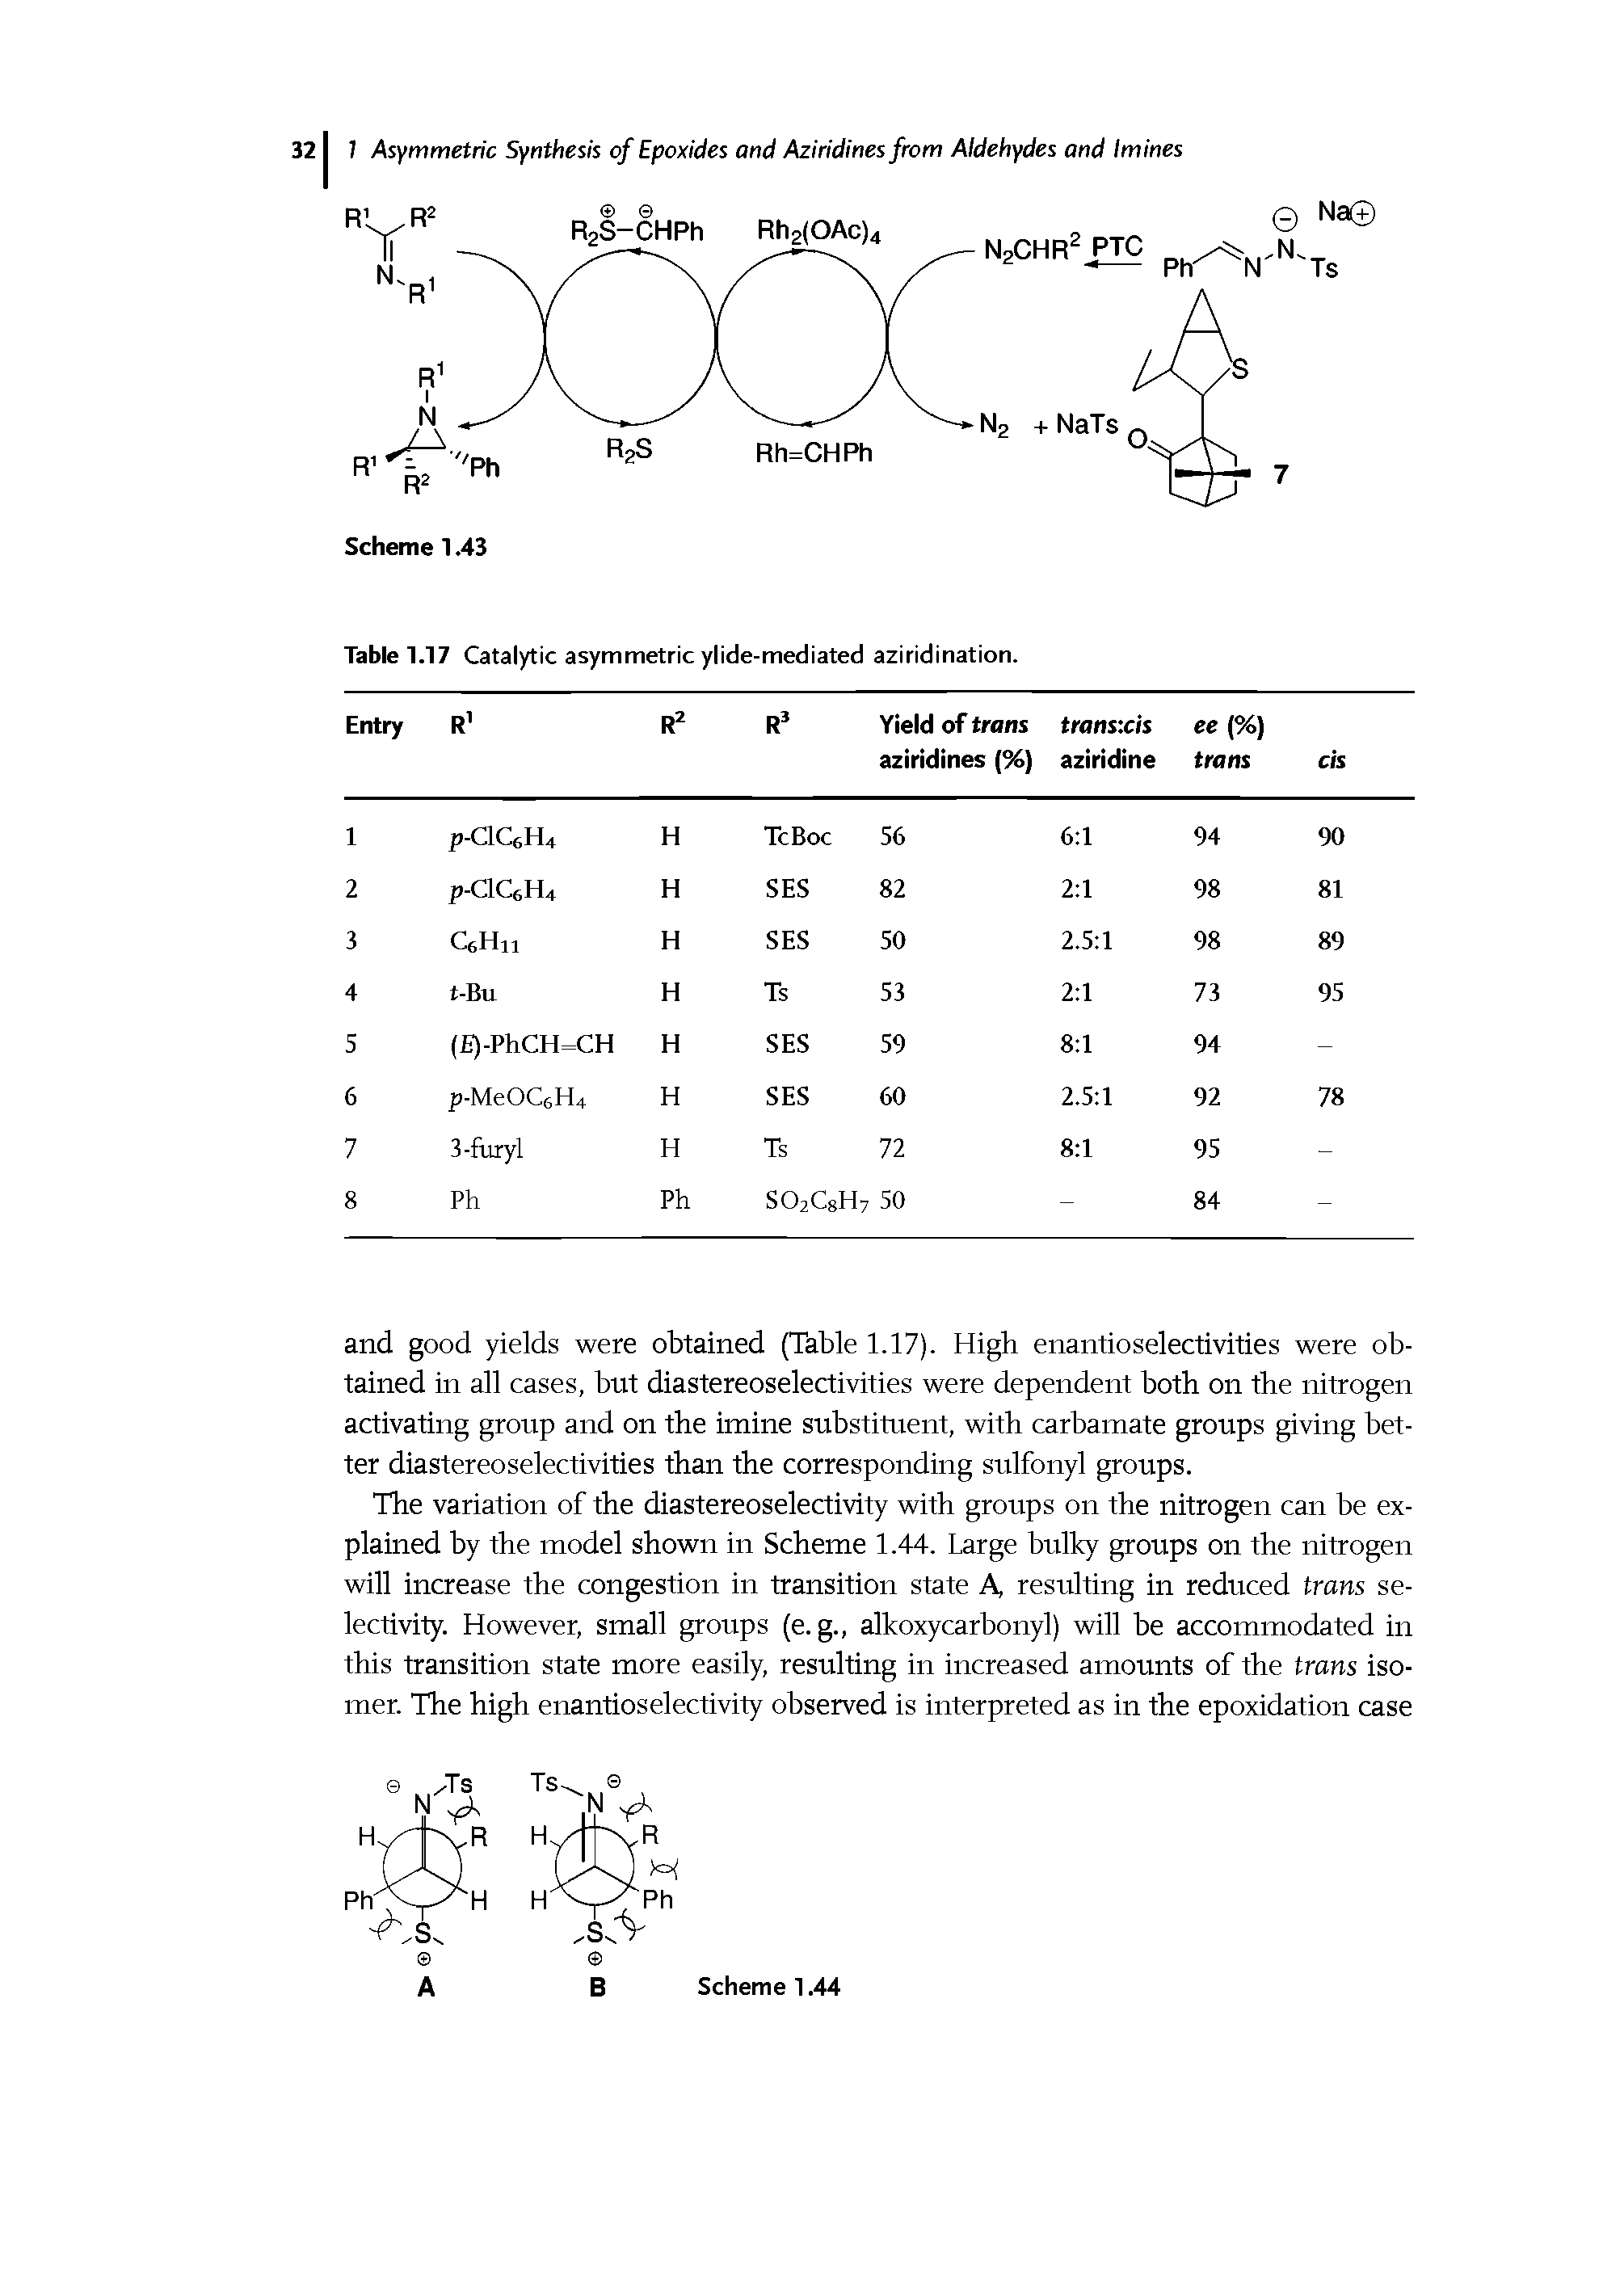 Table 1.17 Catalytic asymmetric ylide-mediated aziridination.